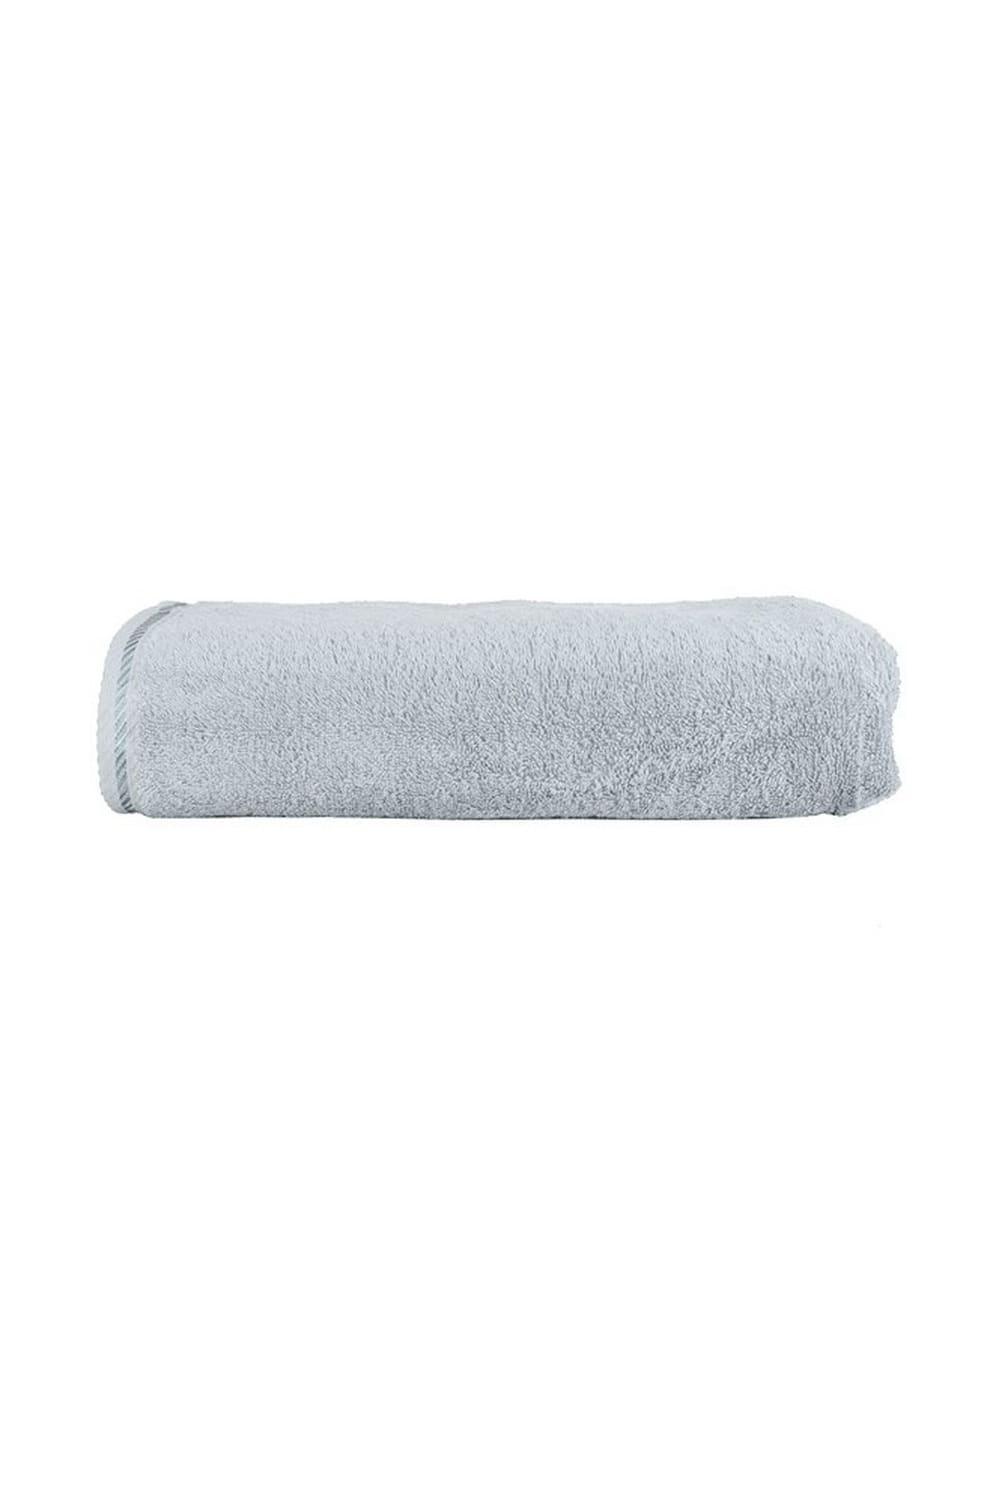 A&R Towels Ultra Soft Big Towel (Light Grey) (One Size)